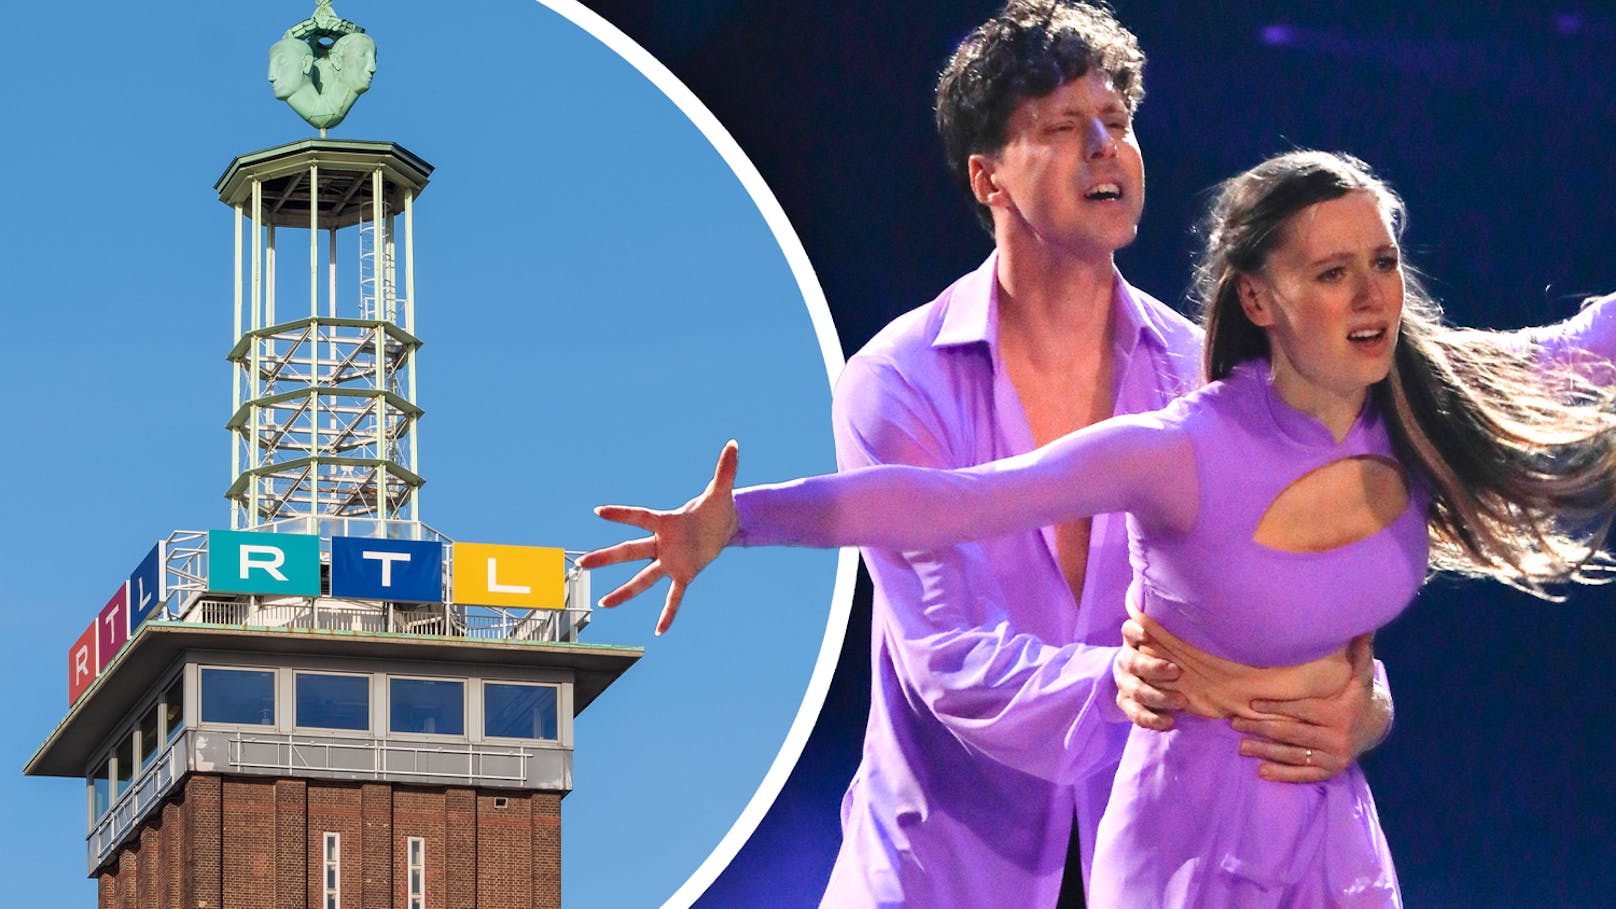 Nach Shitstorm gegen "Let's Dance"-Star – RTL reagiert